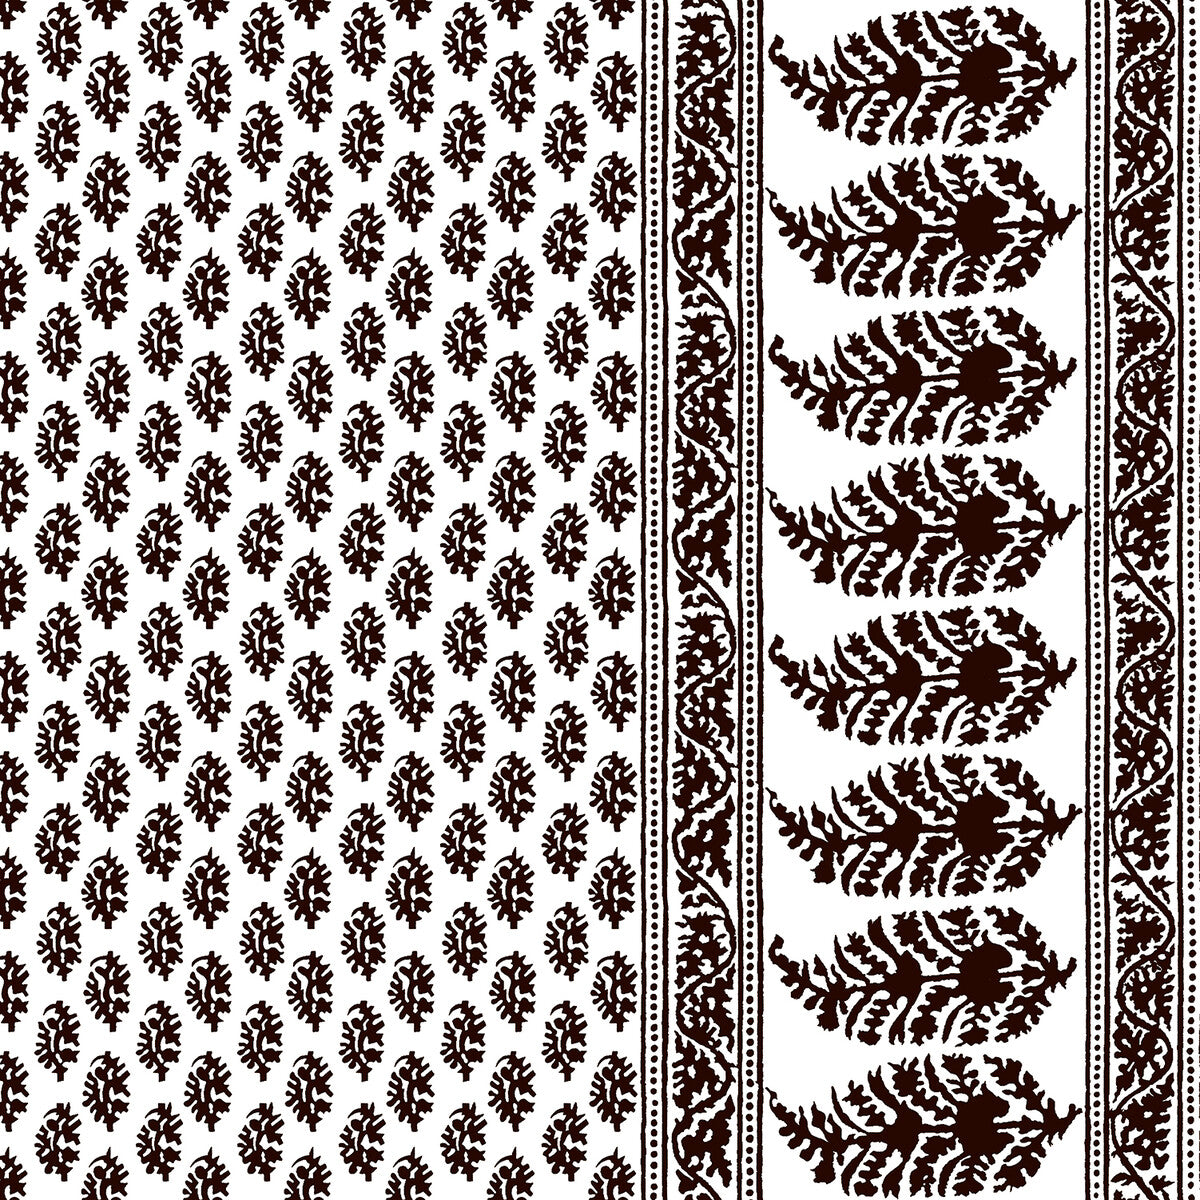 Aravaquita fabric in chocolate color - pattern LCT1028.005.0 - by Gaston y Daniela in the Lorenzo Castillo V collection